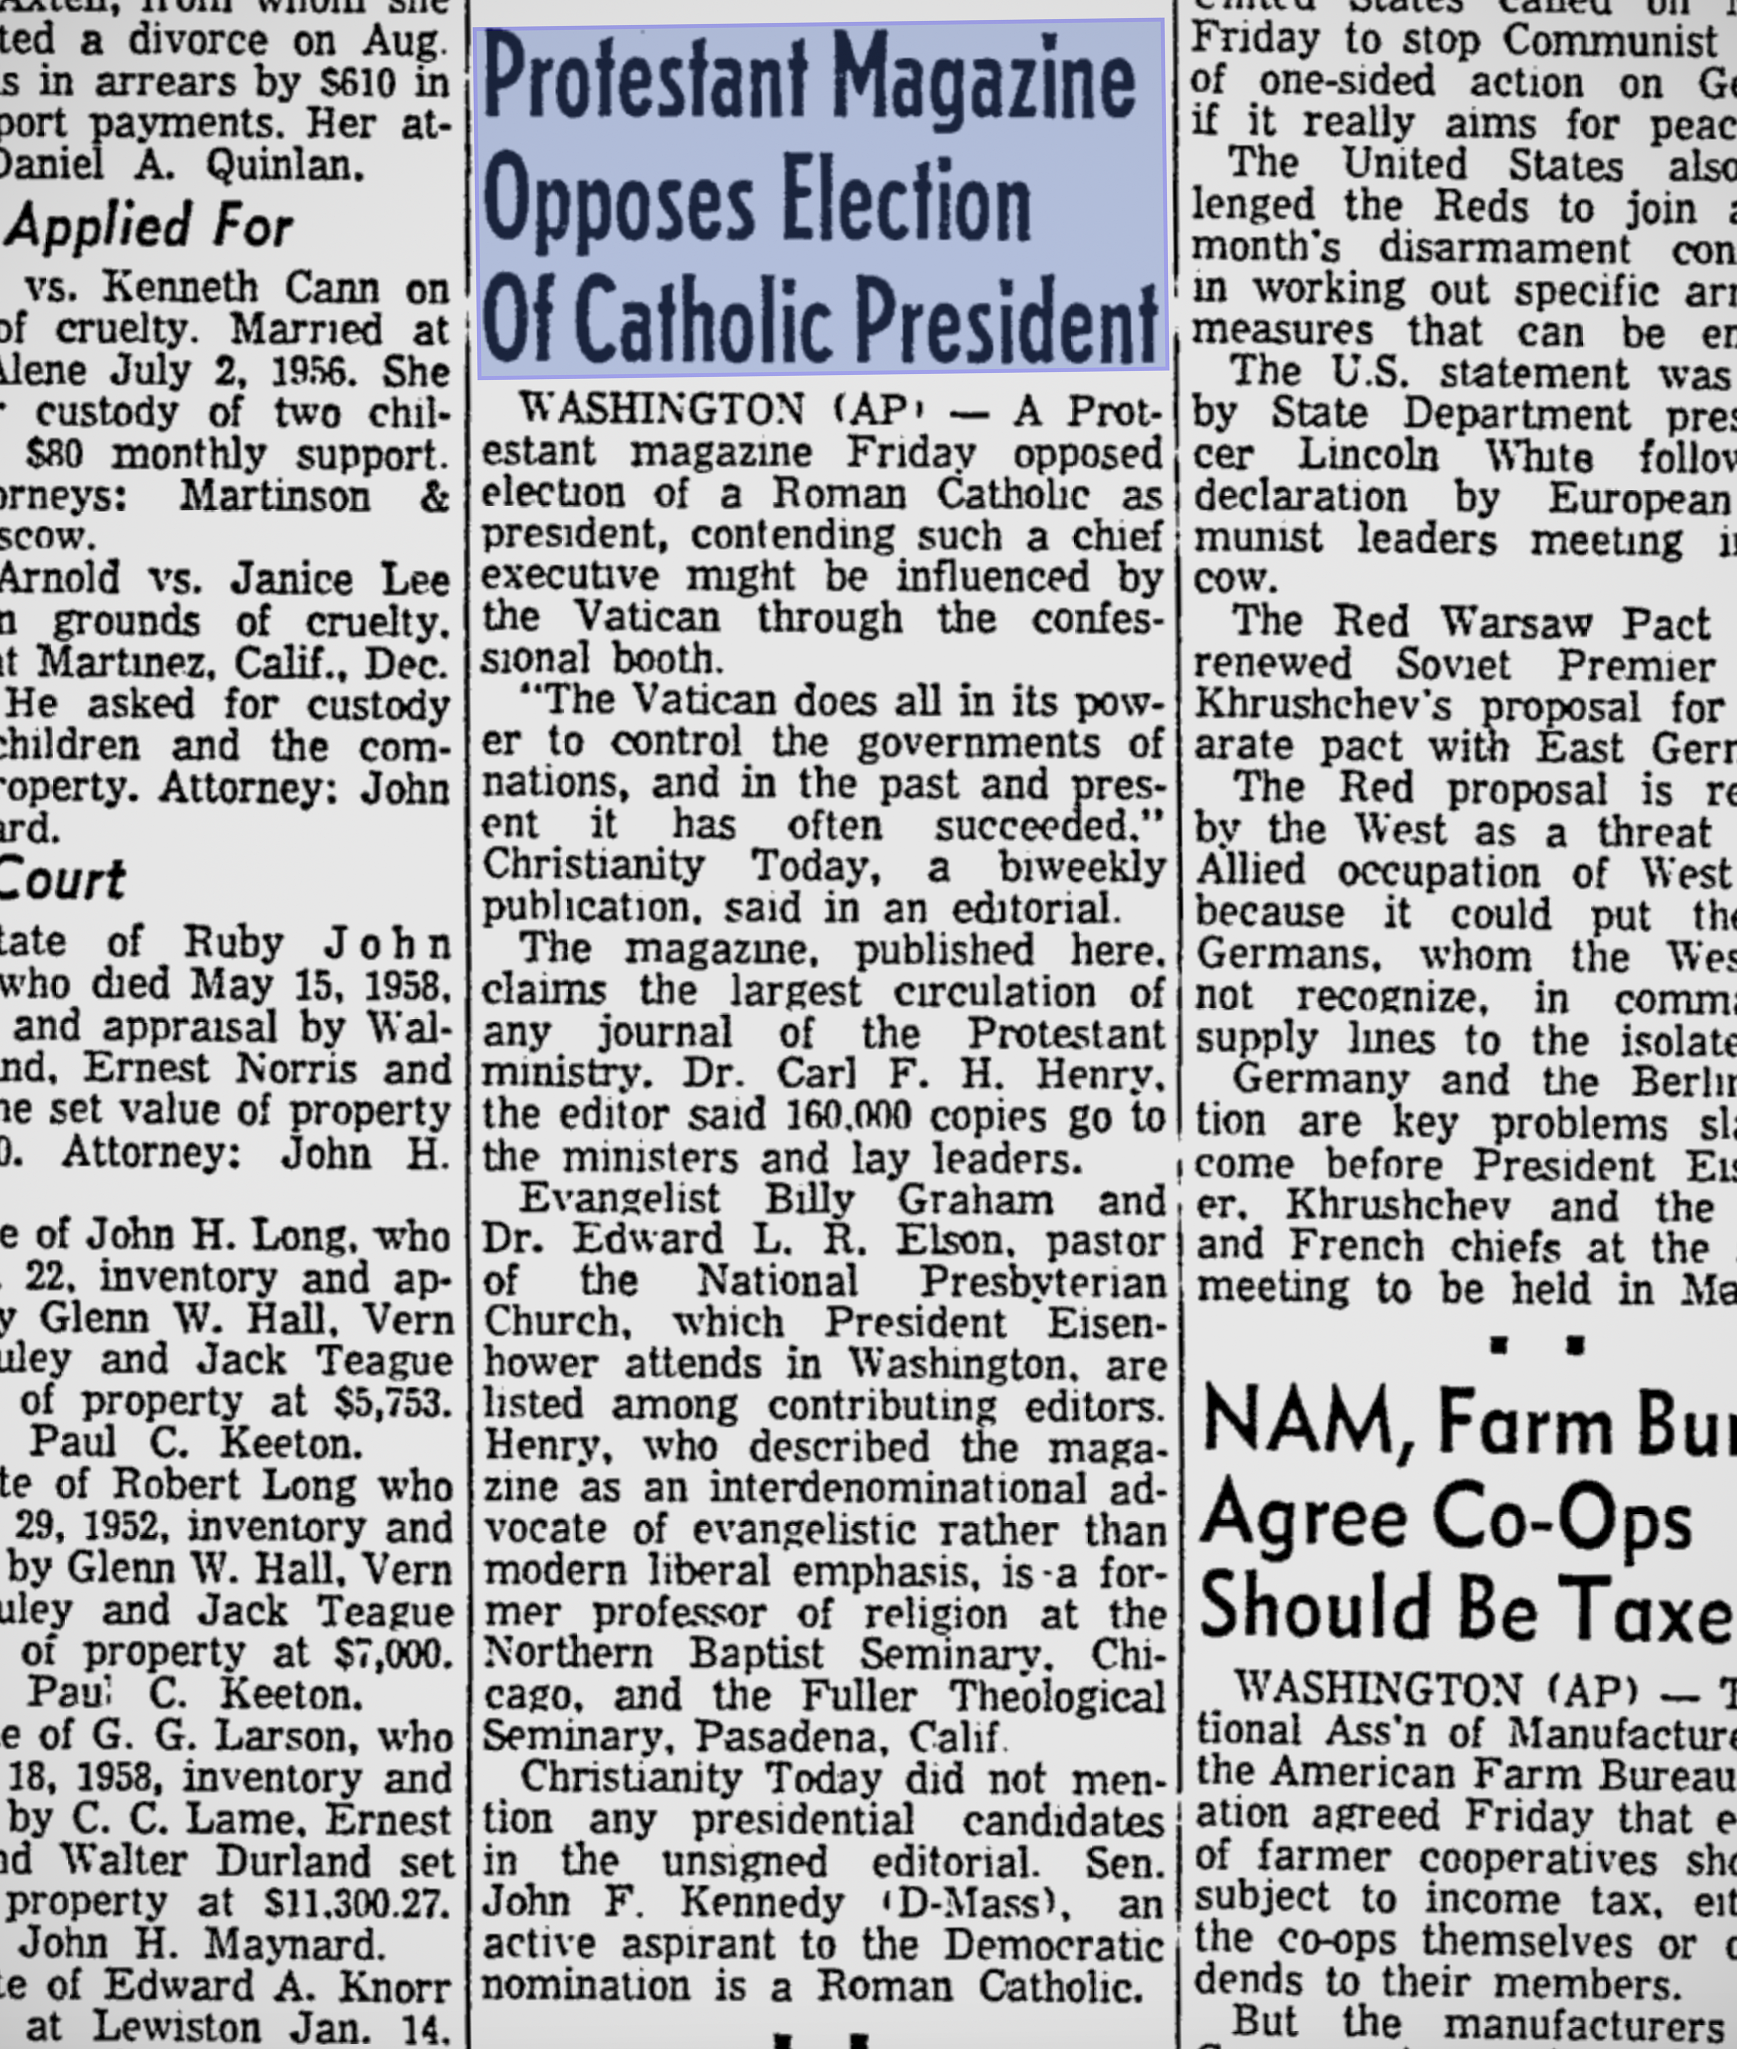 Article in February 1960 newspaper, Lewiston Morning Tribune, with the headline, "Protestant Magazine Opposes Election of Catholic President."